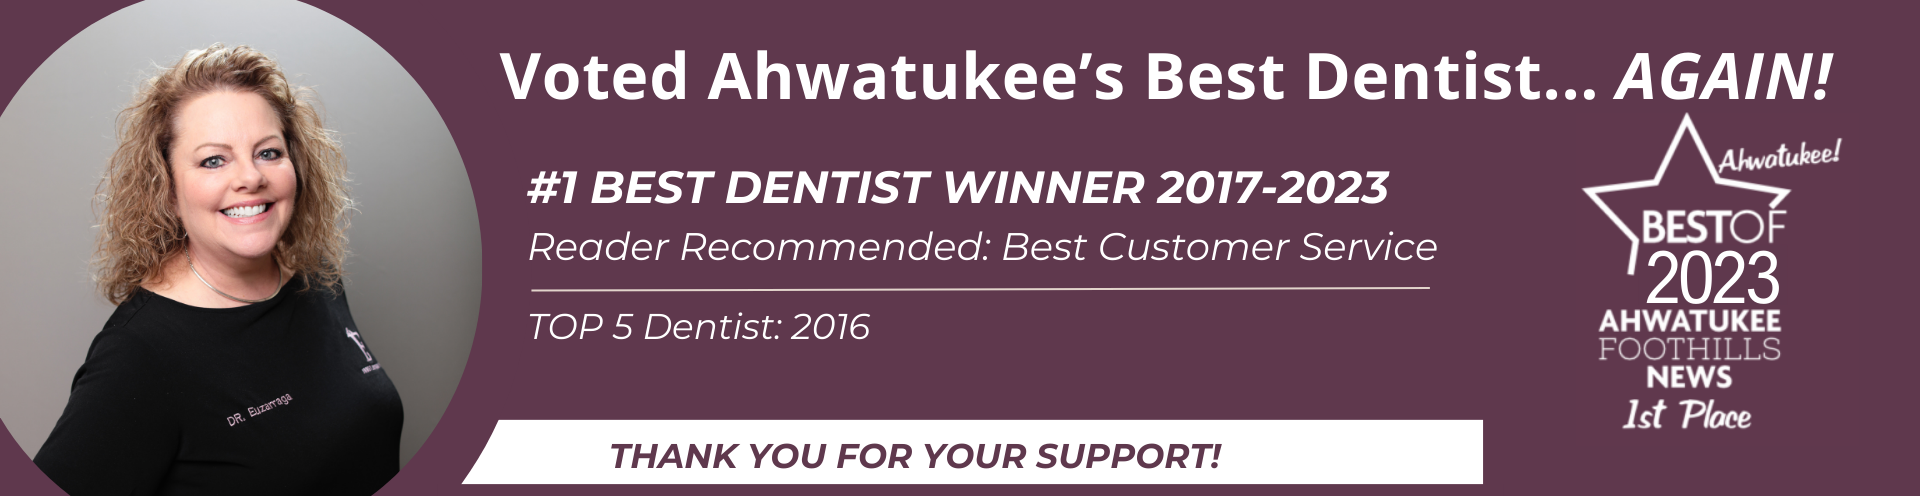 Best-Dentist-Ahwatukee